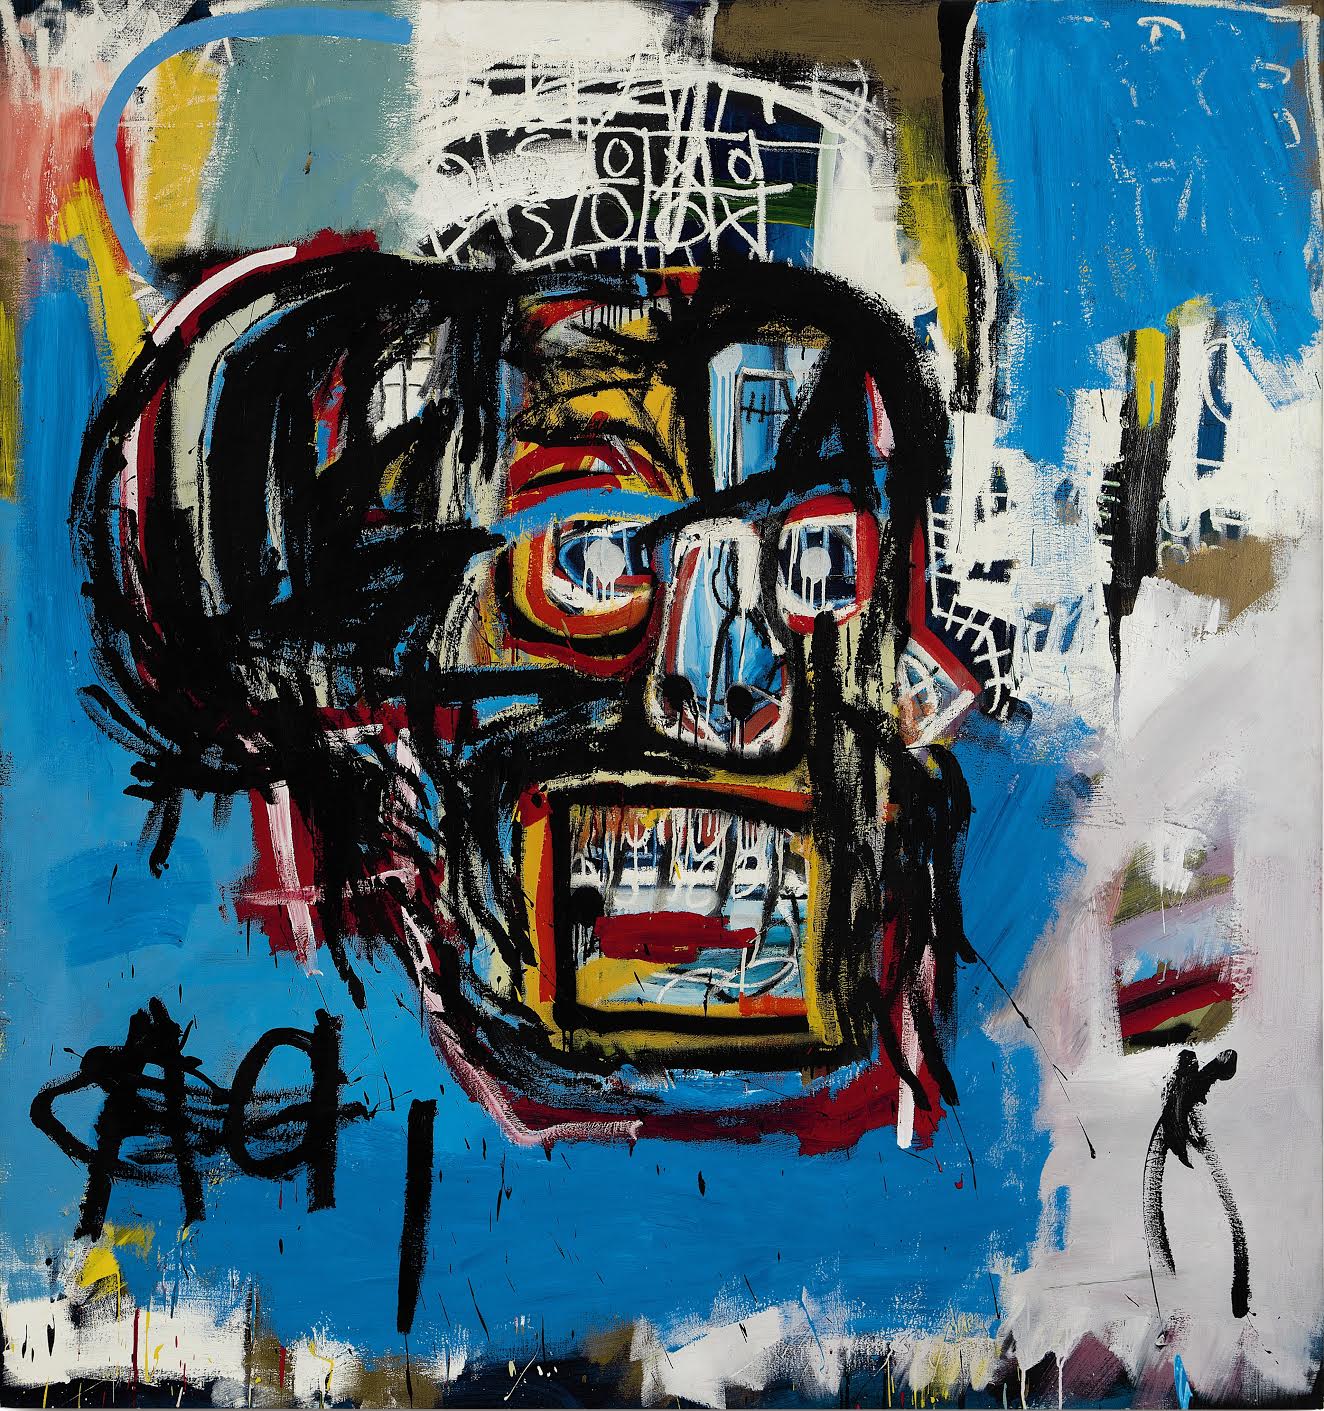 Jean Michel Basquiat - "Untitled" (1982)